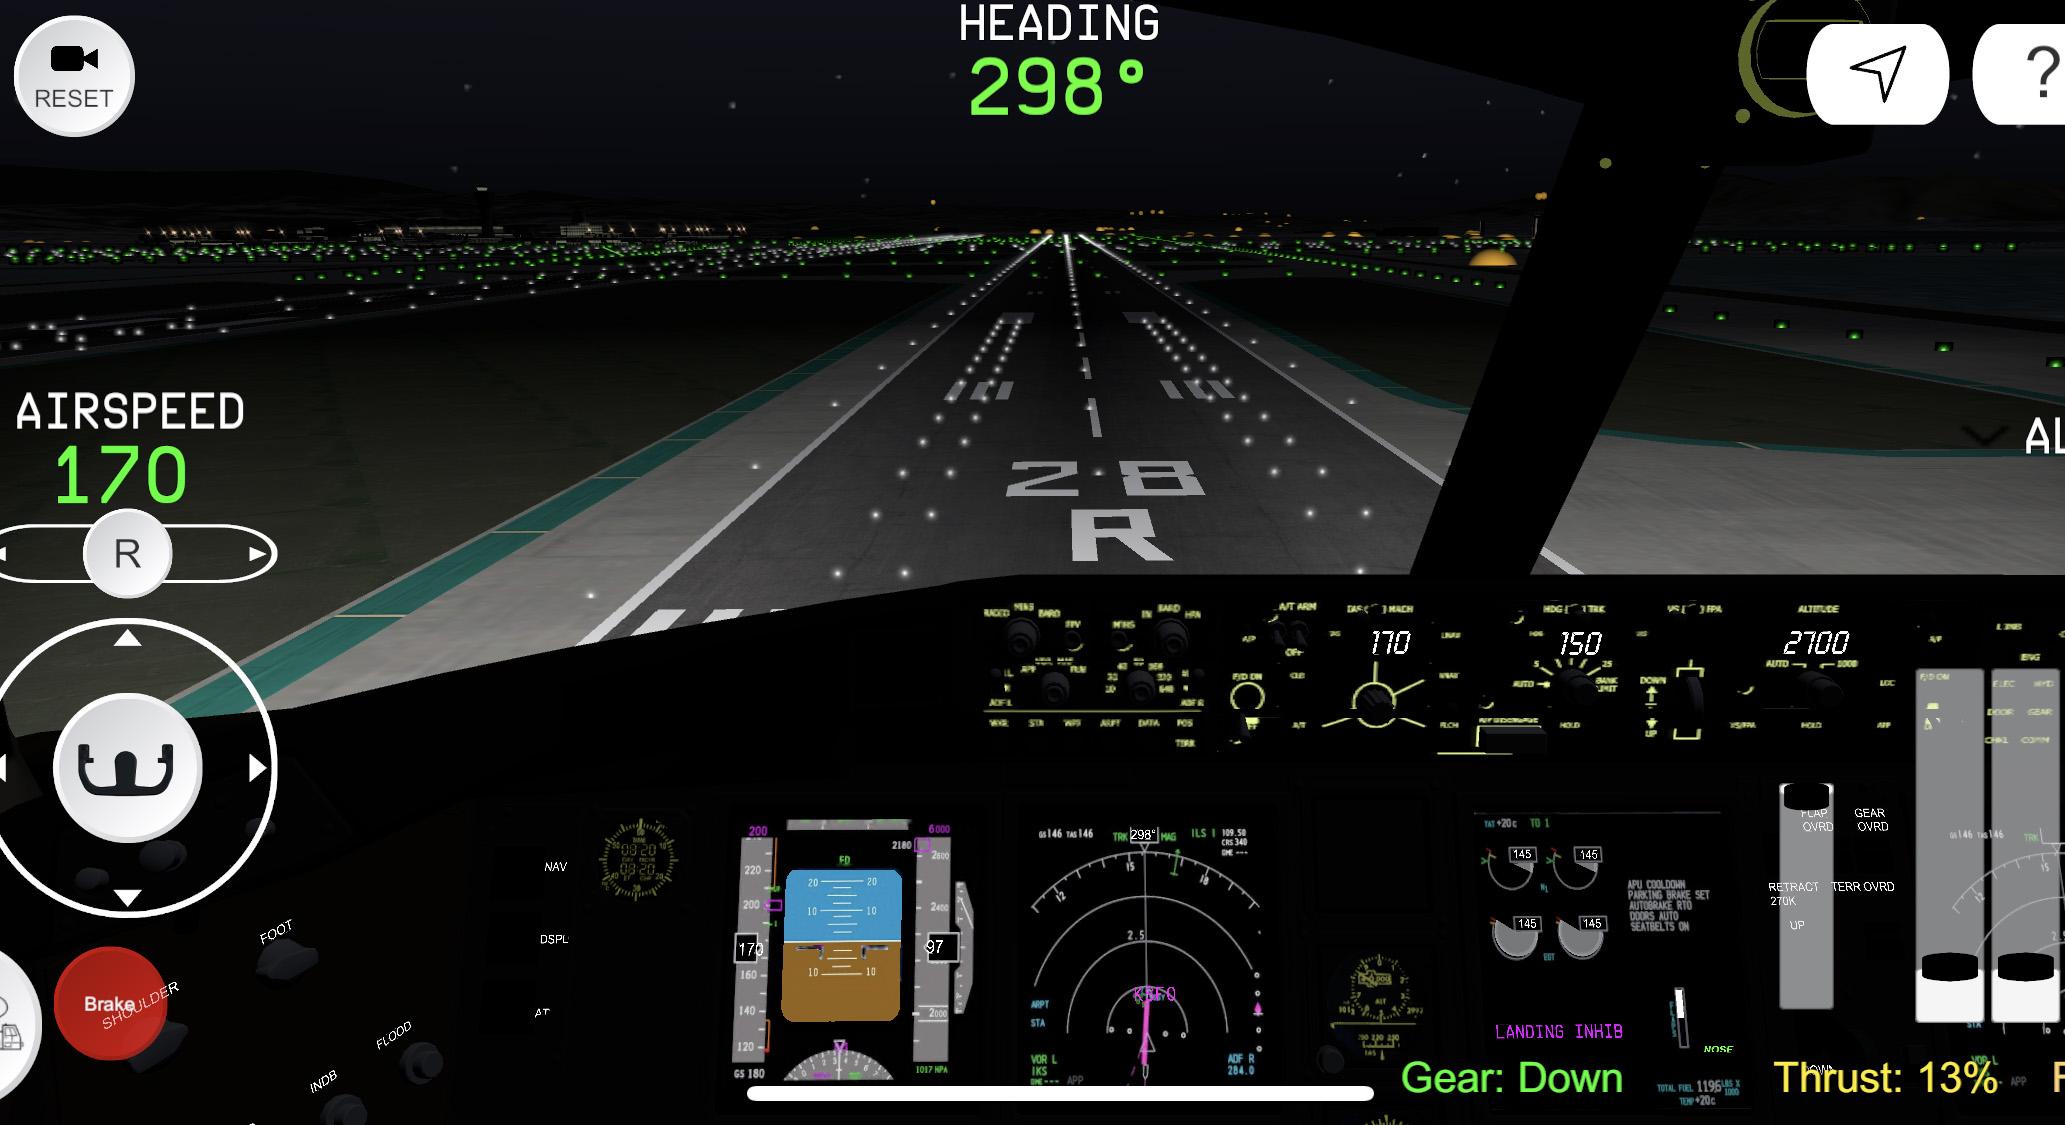 androud cracked flight simulator apk download